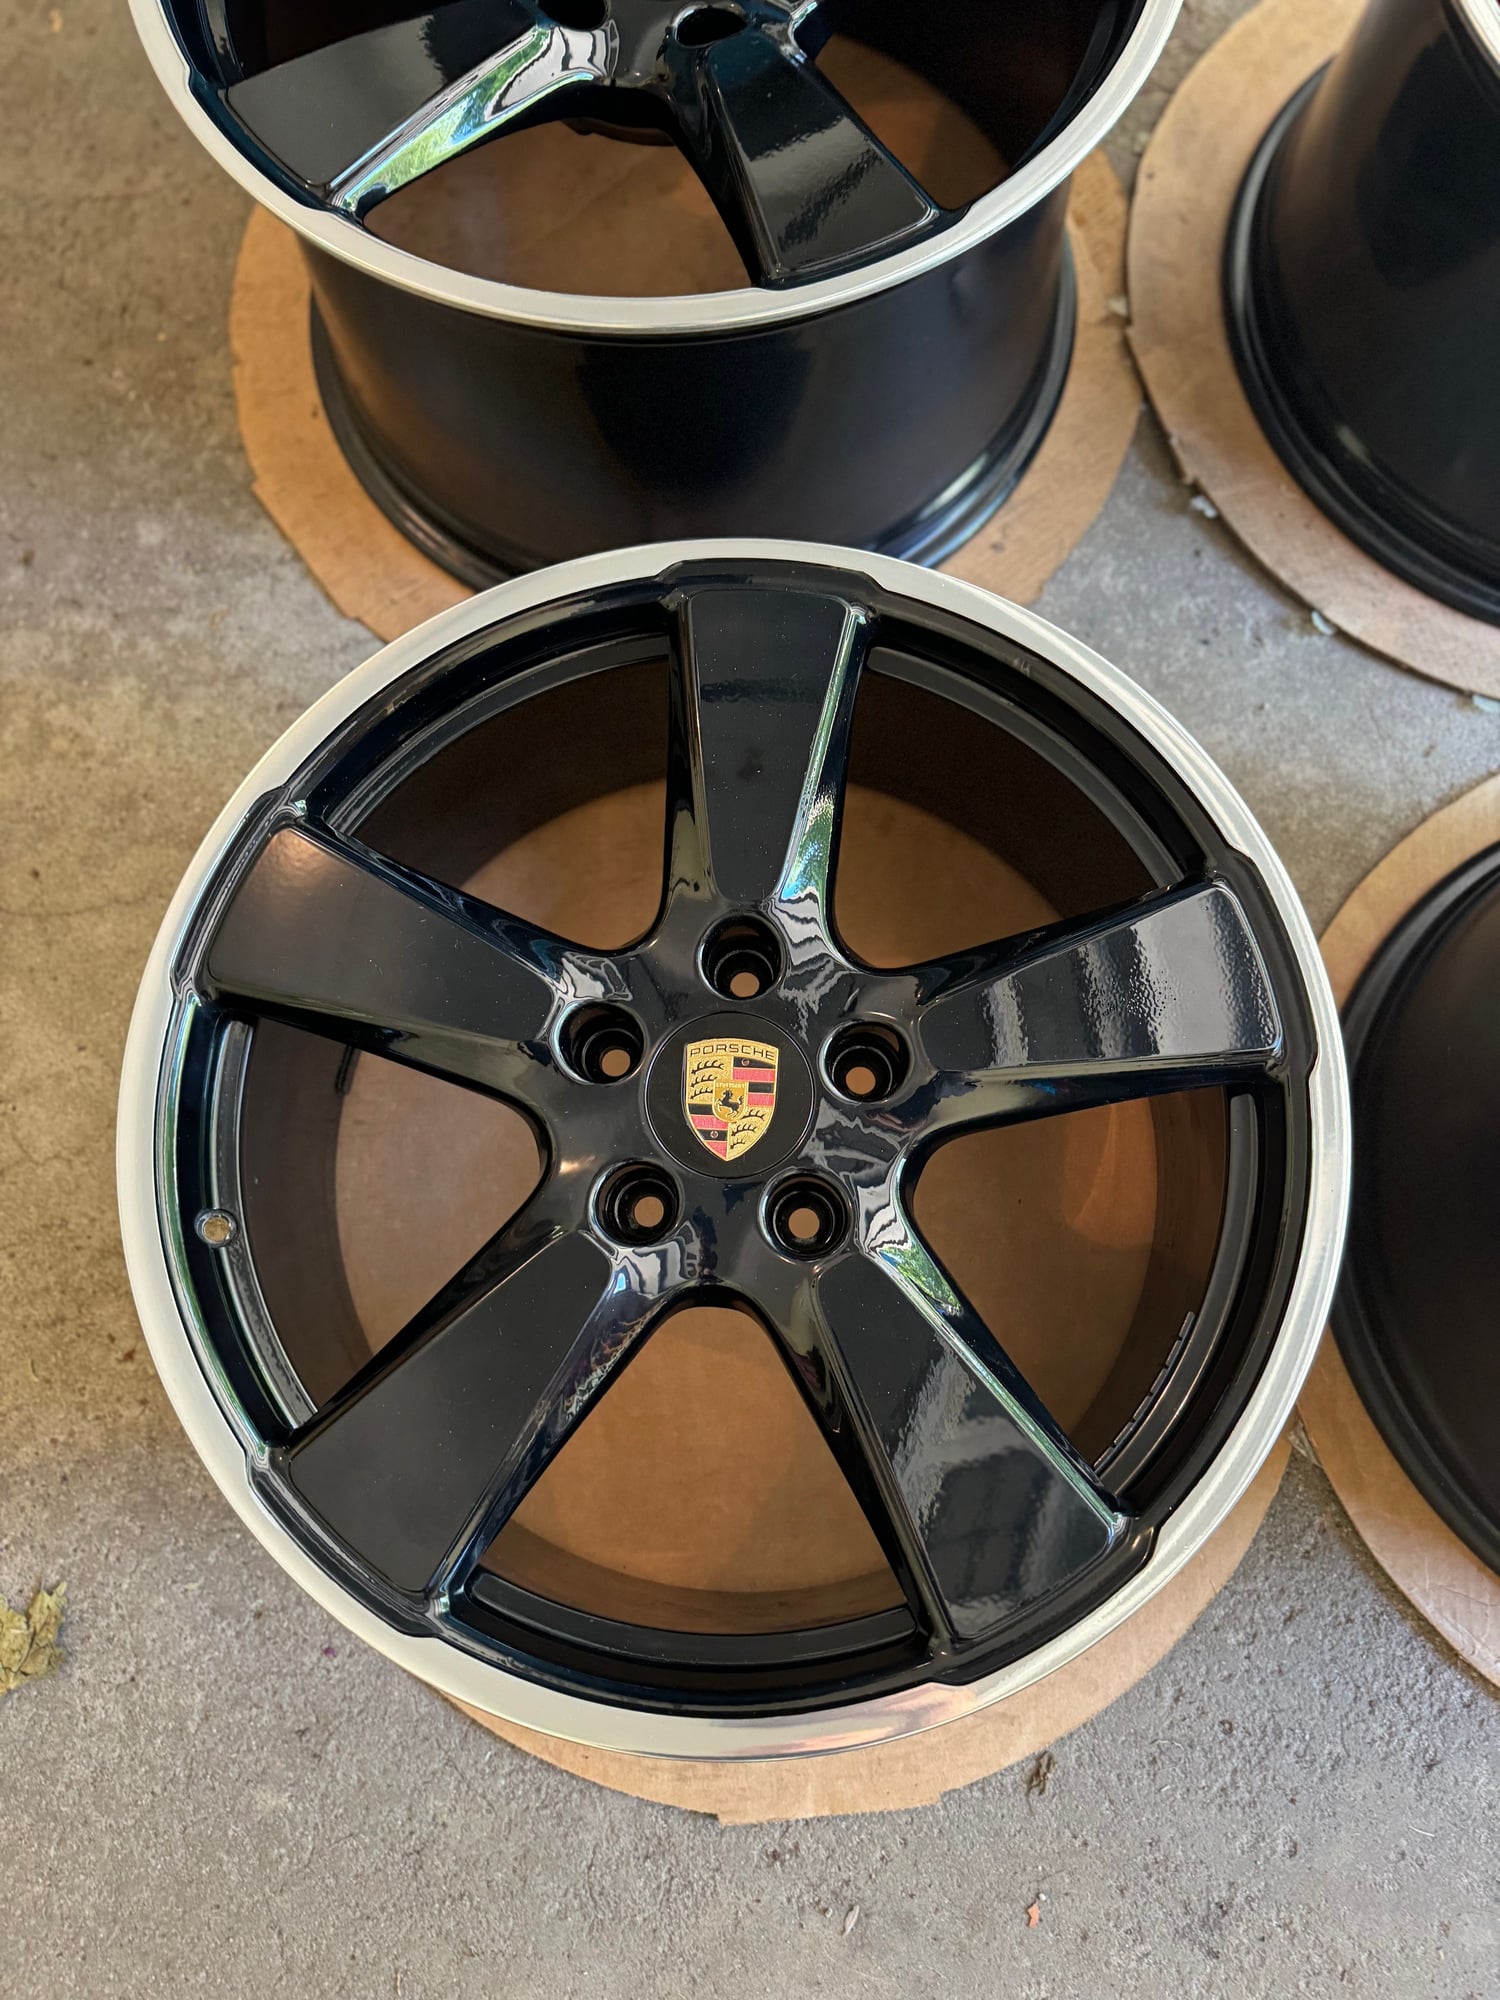 2019 Porsche GT3 - OEM 20" Porsche 991 Sport Classic Wheels - Black/Polished - Accessories - $3,800 - Plymouth, MN 55447, United States